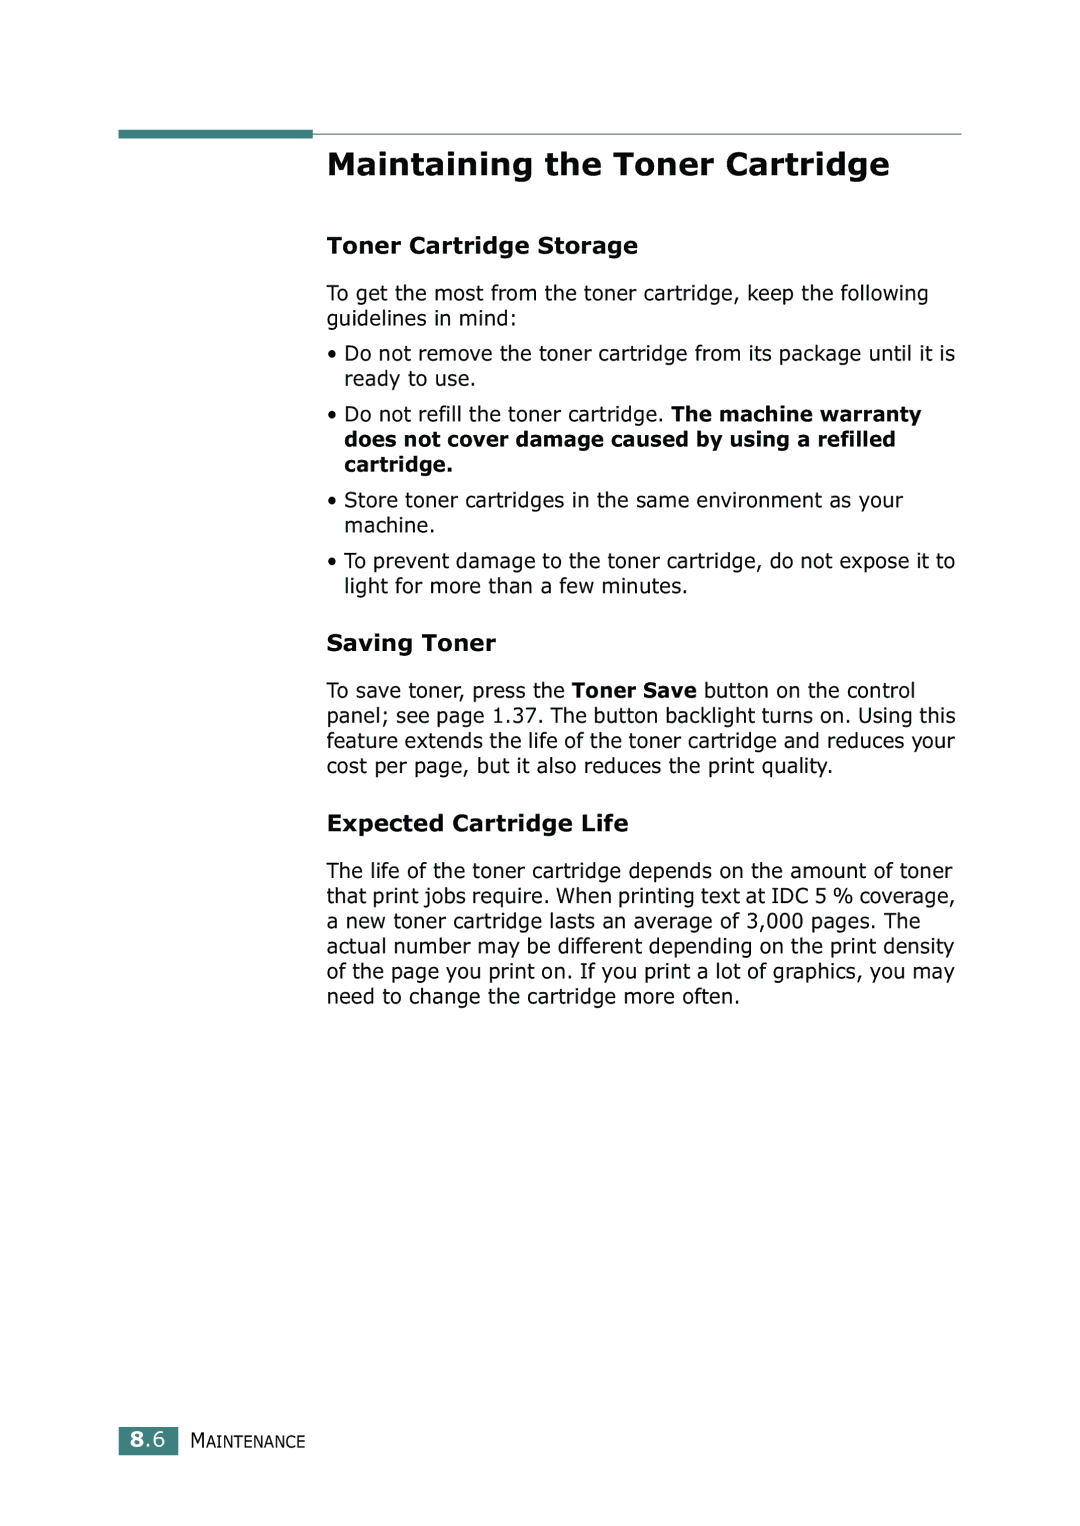 Samsung SF-755P manual Maintaining the Toner Cartridge, Toner Cartridge Storage, Saving Toner, Expected Cartridge Life 